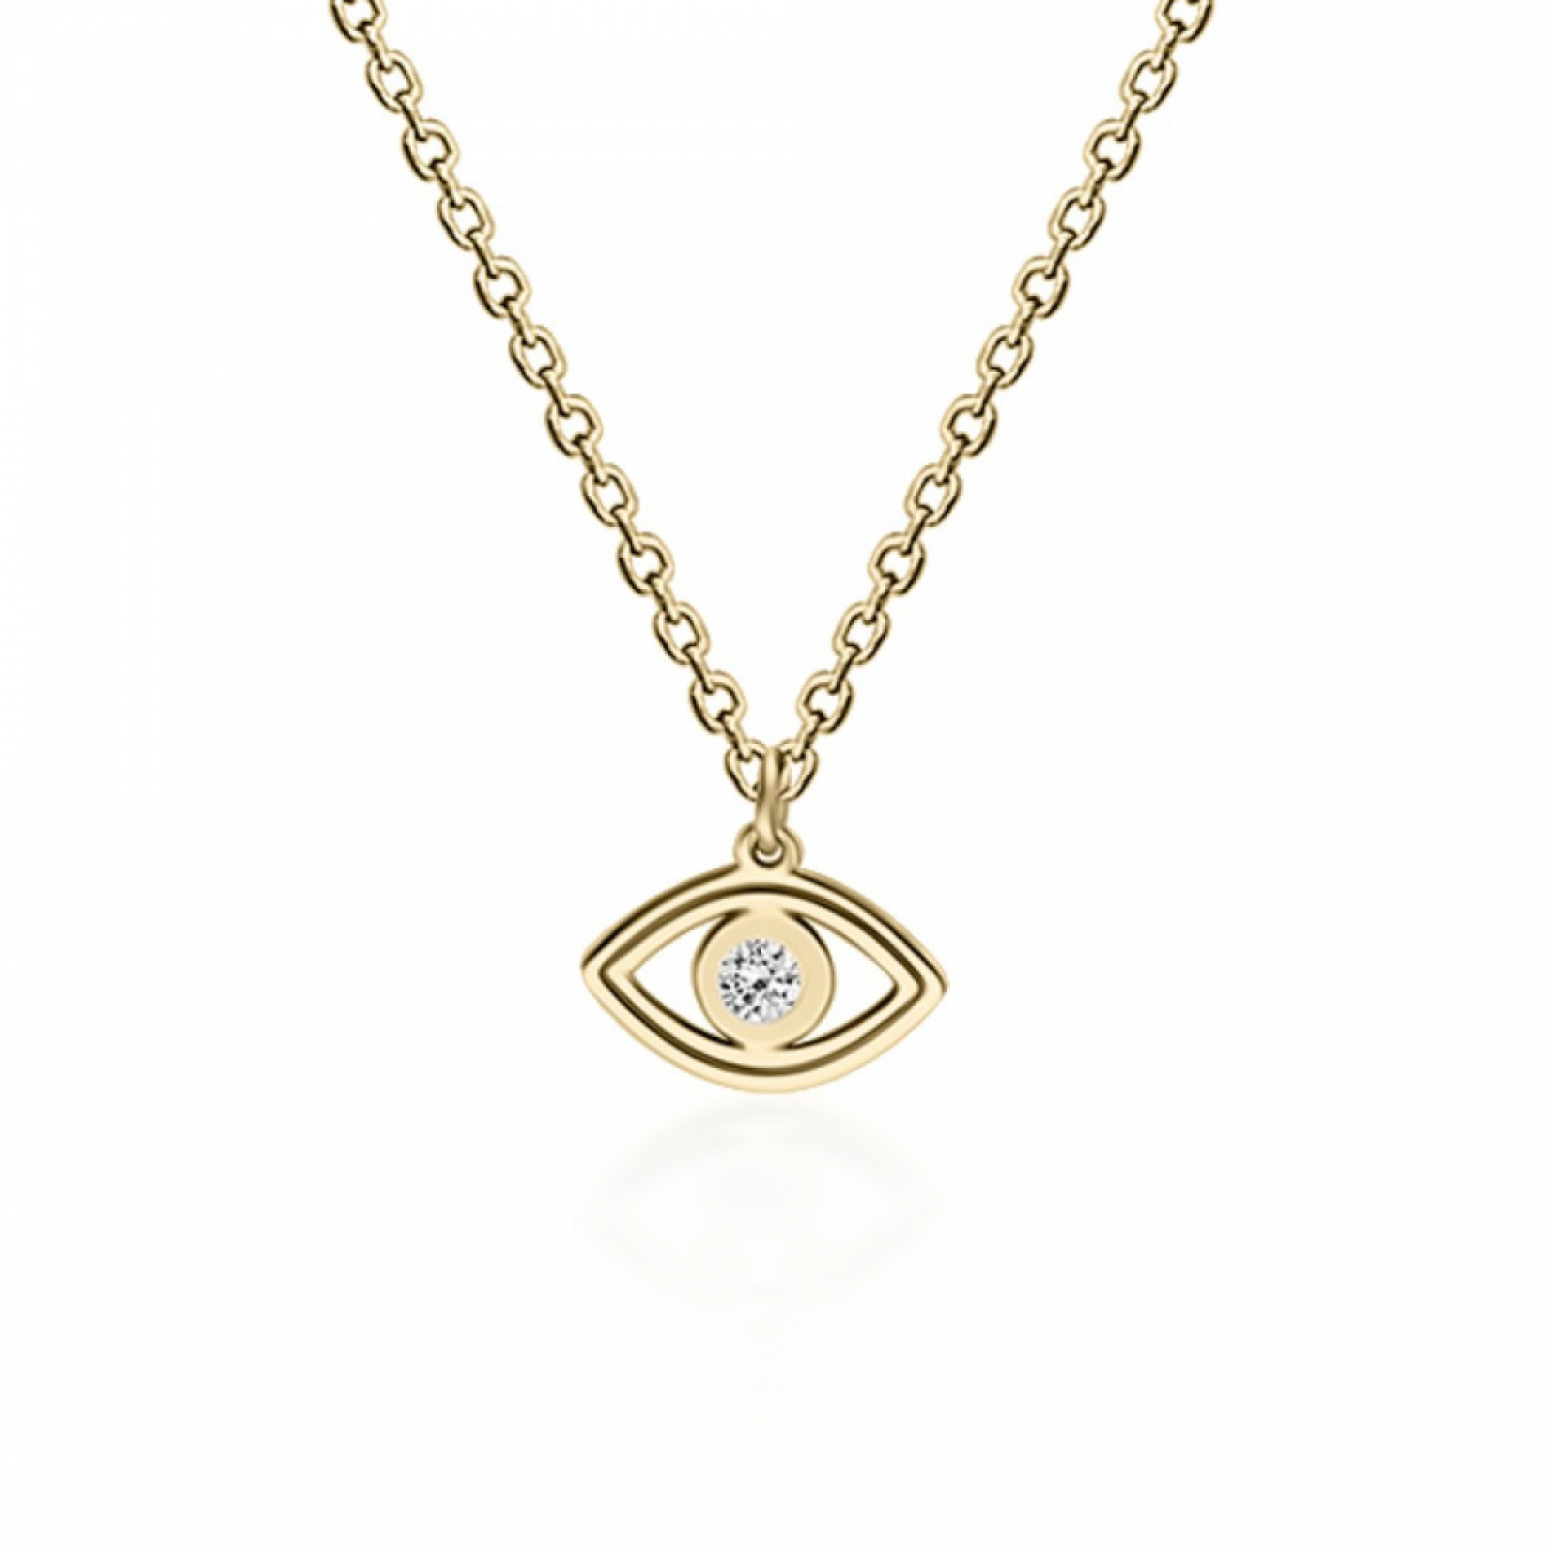 Eye necklace, Κ14 gold with diamond 0.02ct, VS2, H ko5295 NECKLACES Κοσμηματα - chrilia.gr